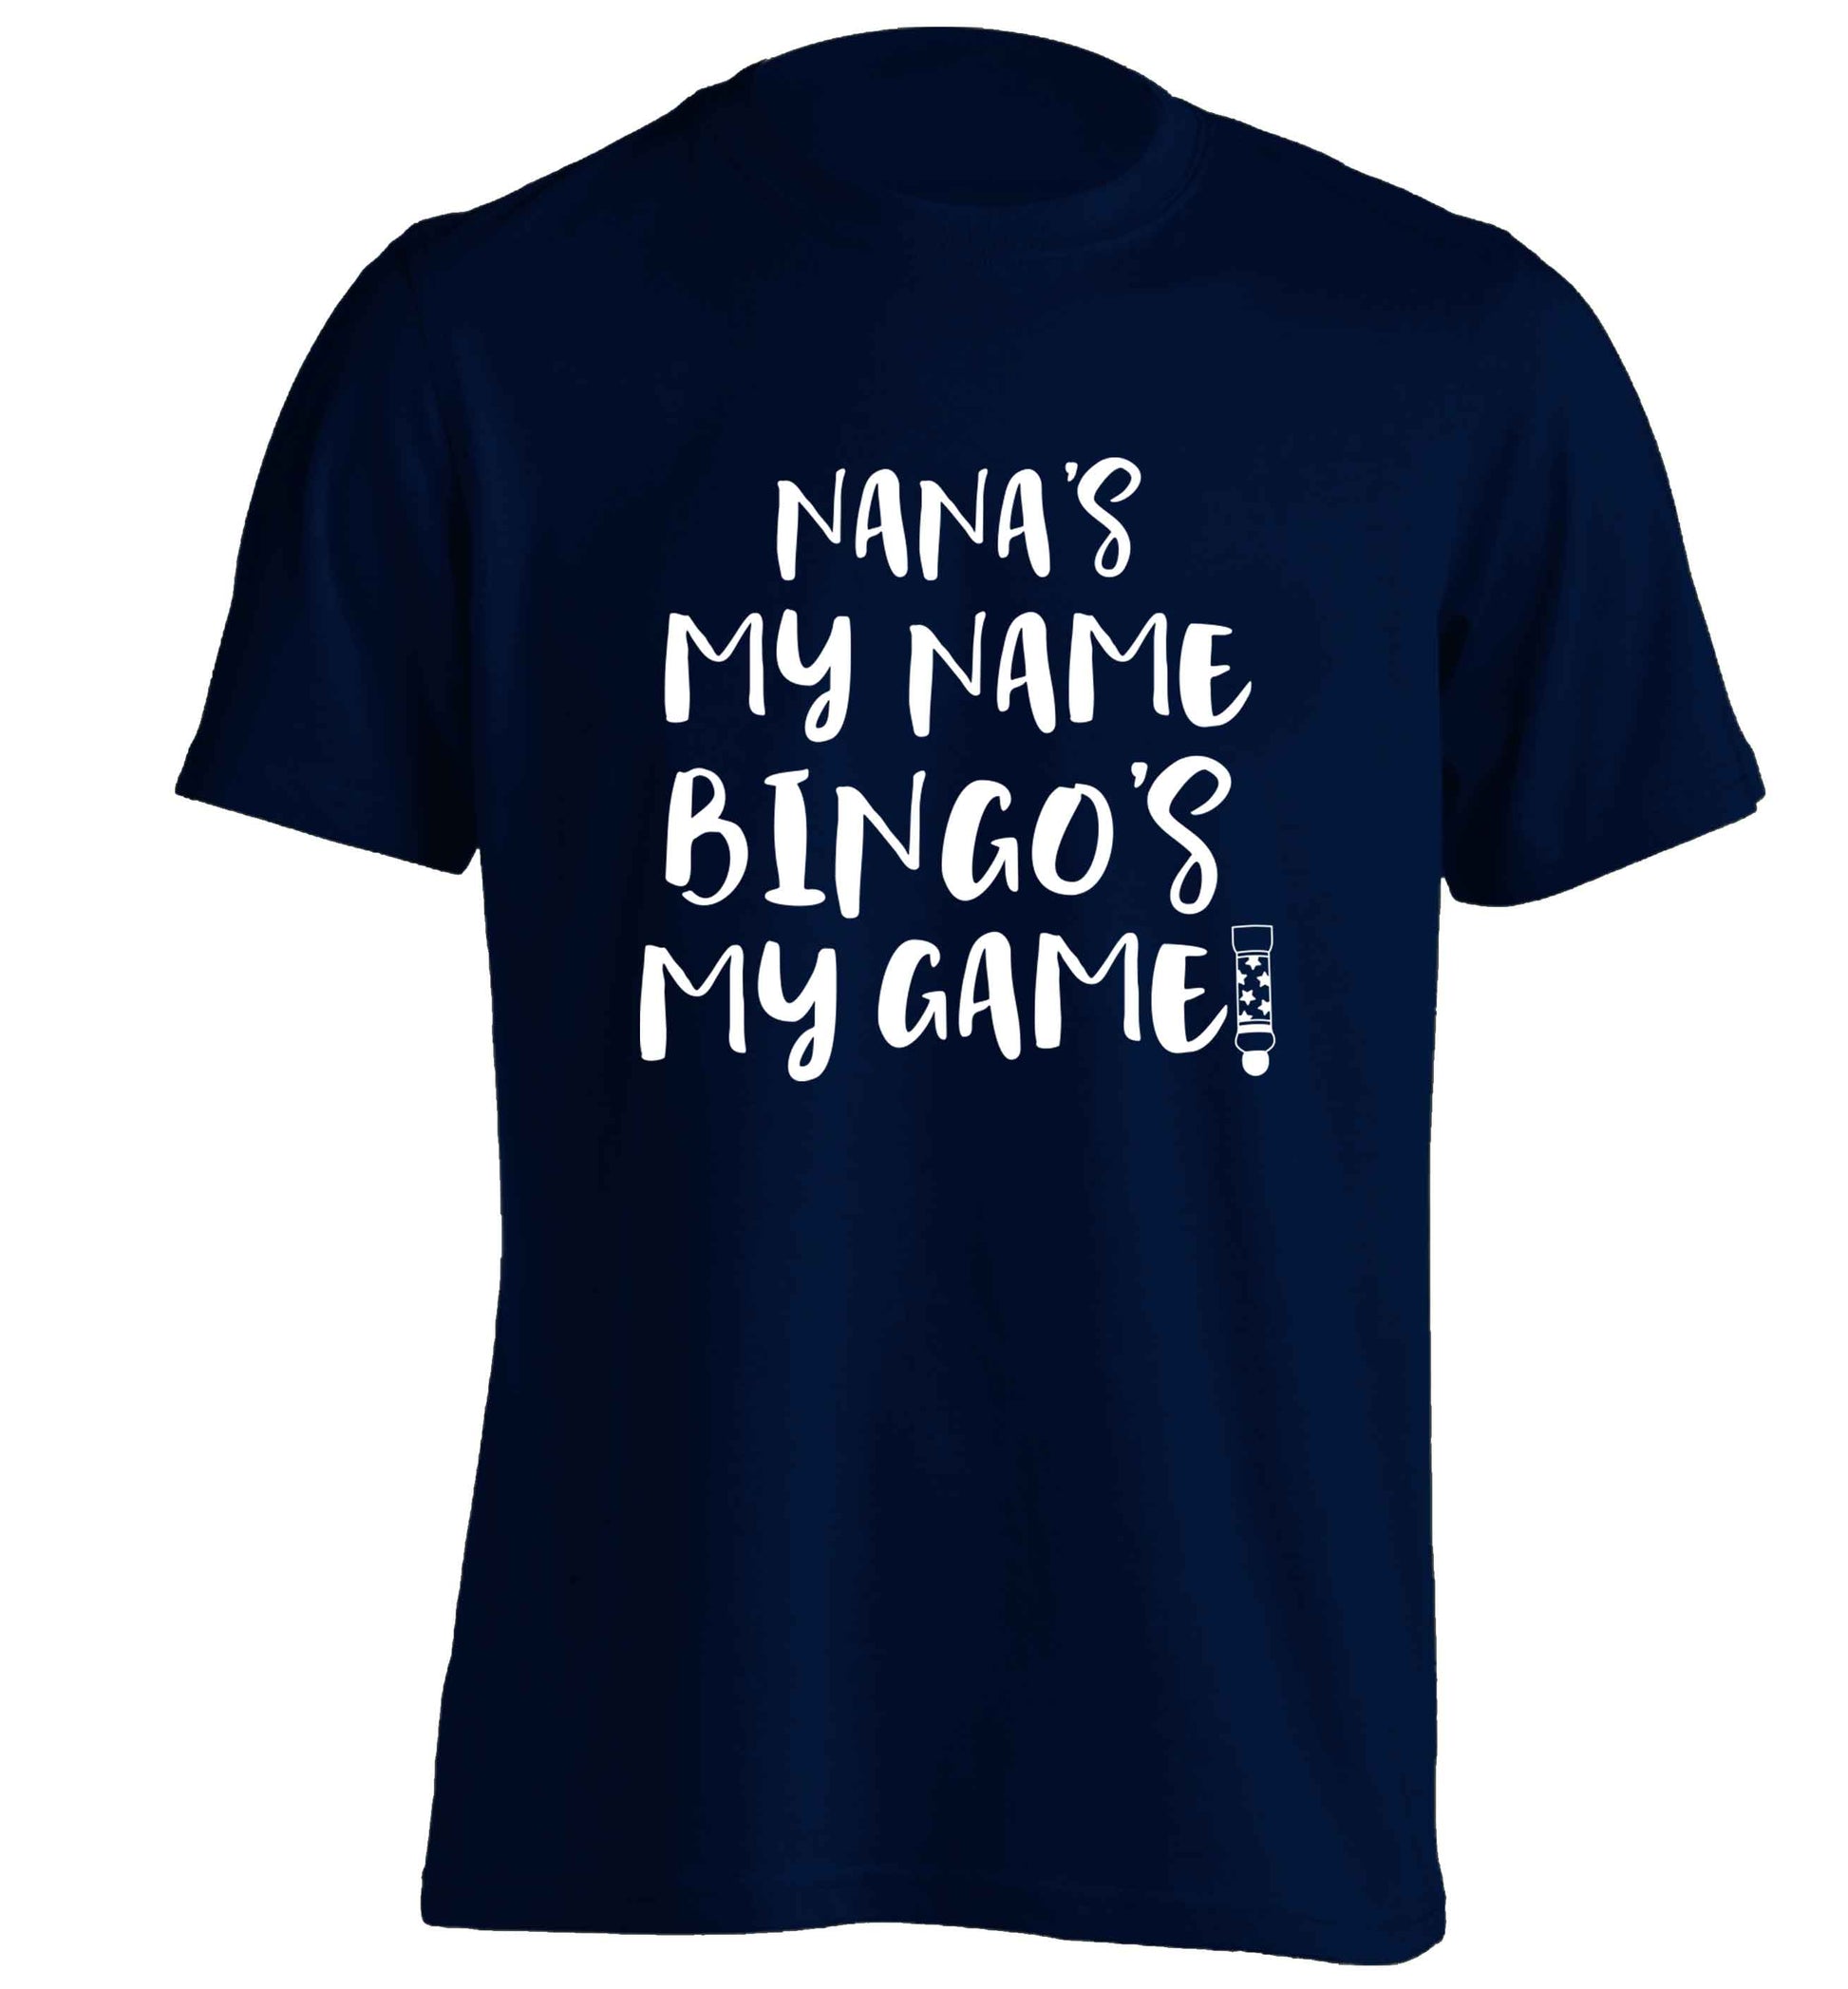 Nana's my name bingo's my game! adults unisex navy Tshirt 2XL